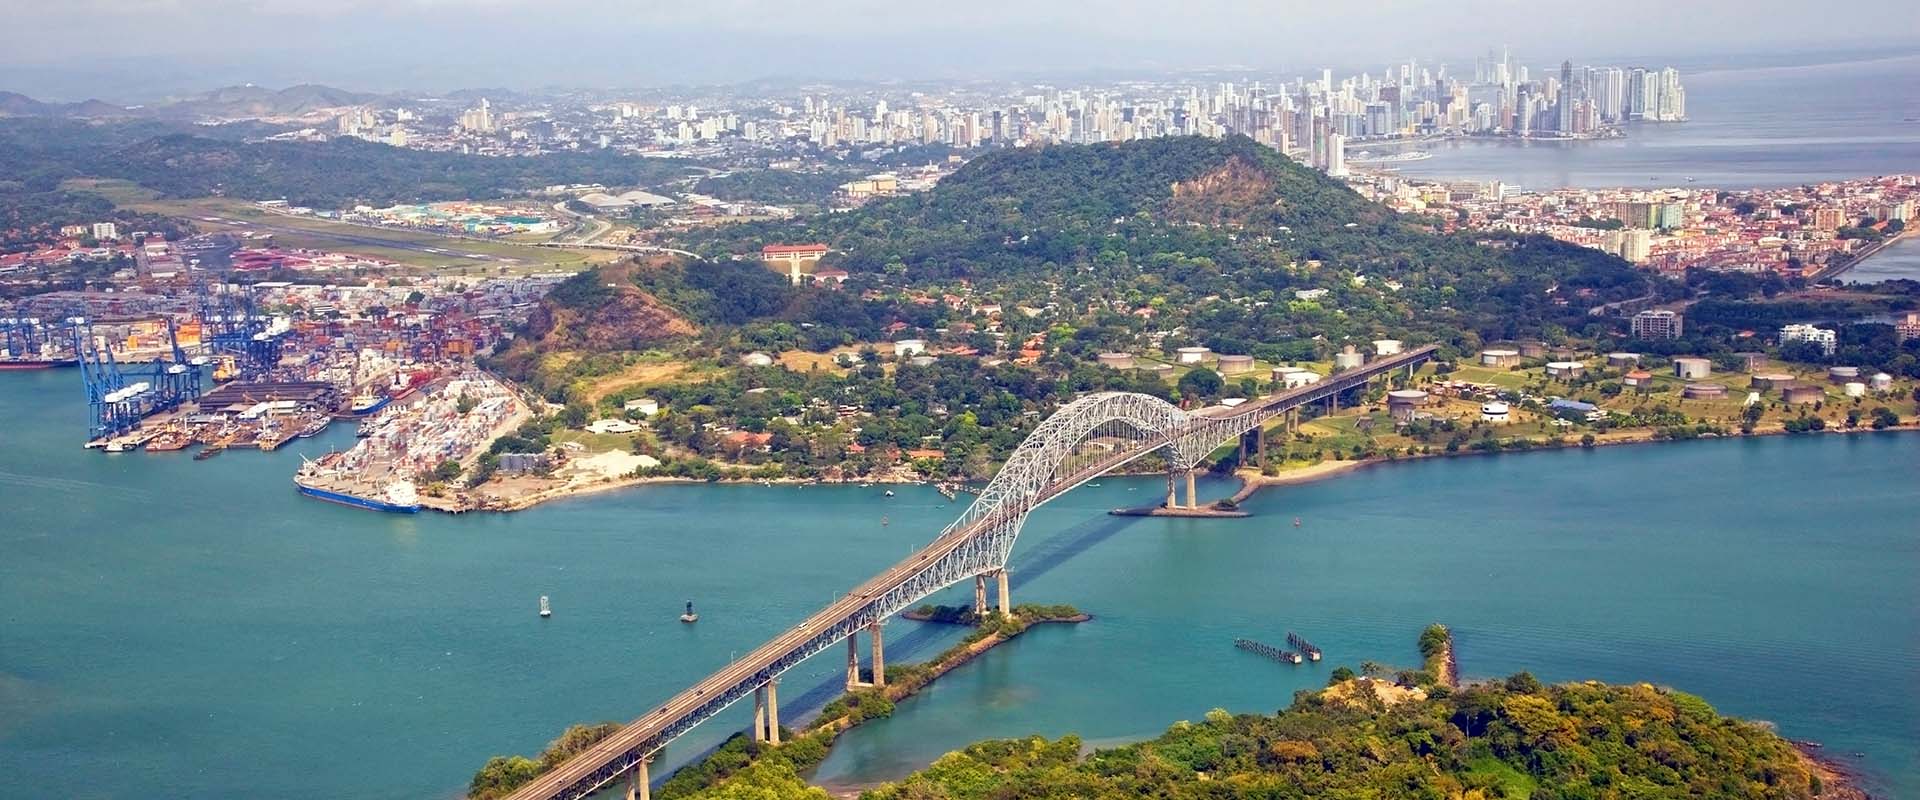 Panamakanal Abenteuer-Kreuzfahrten